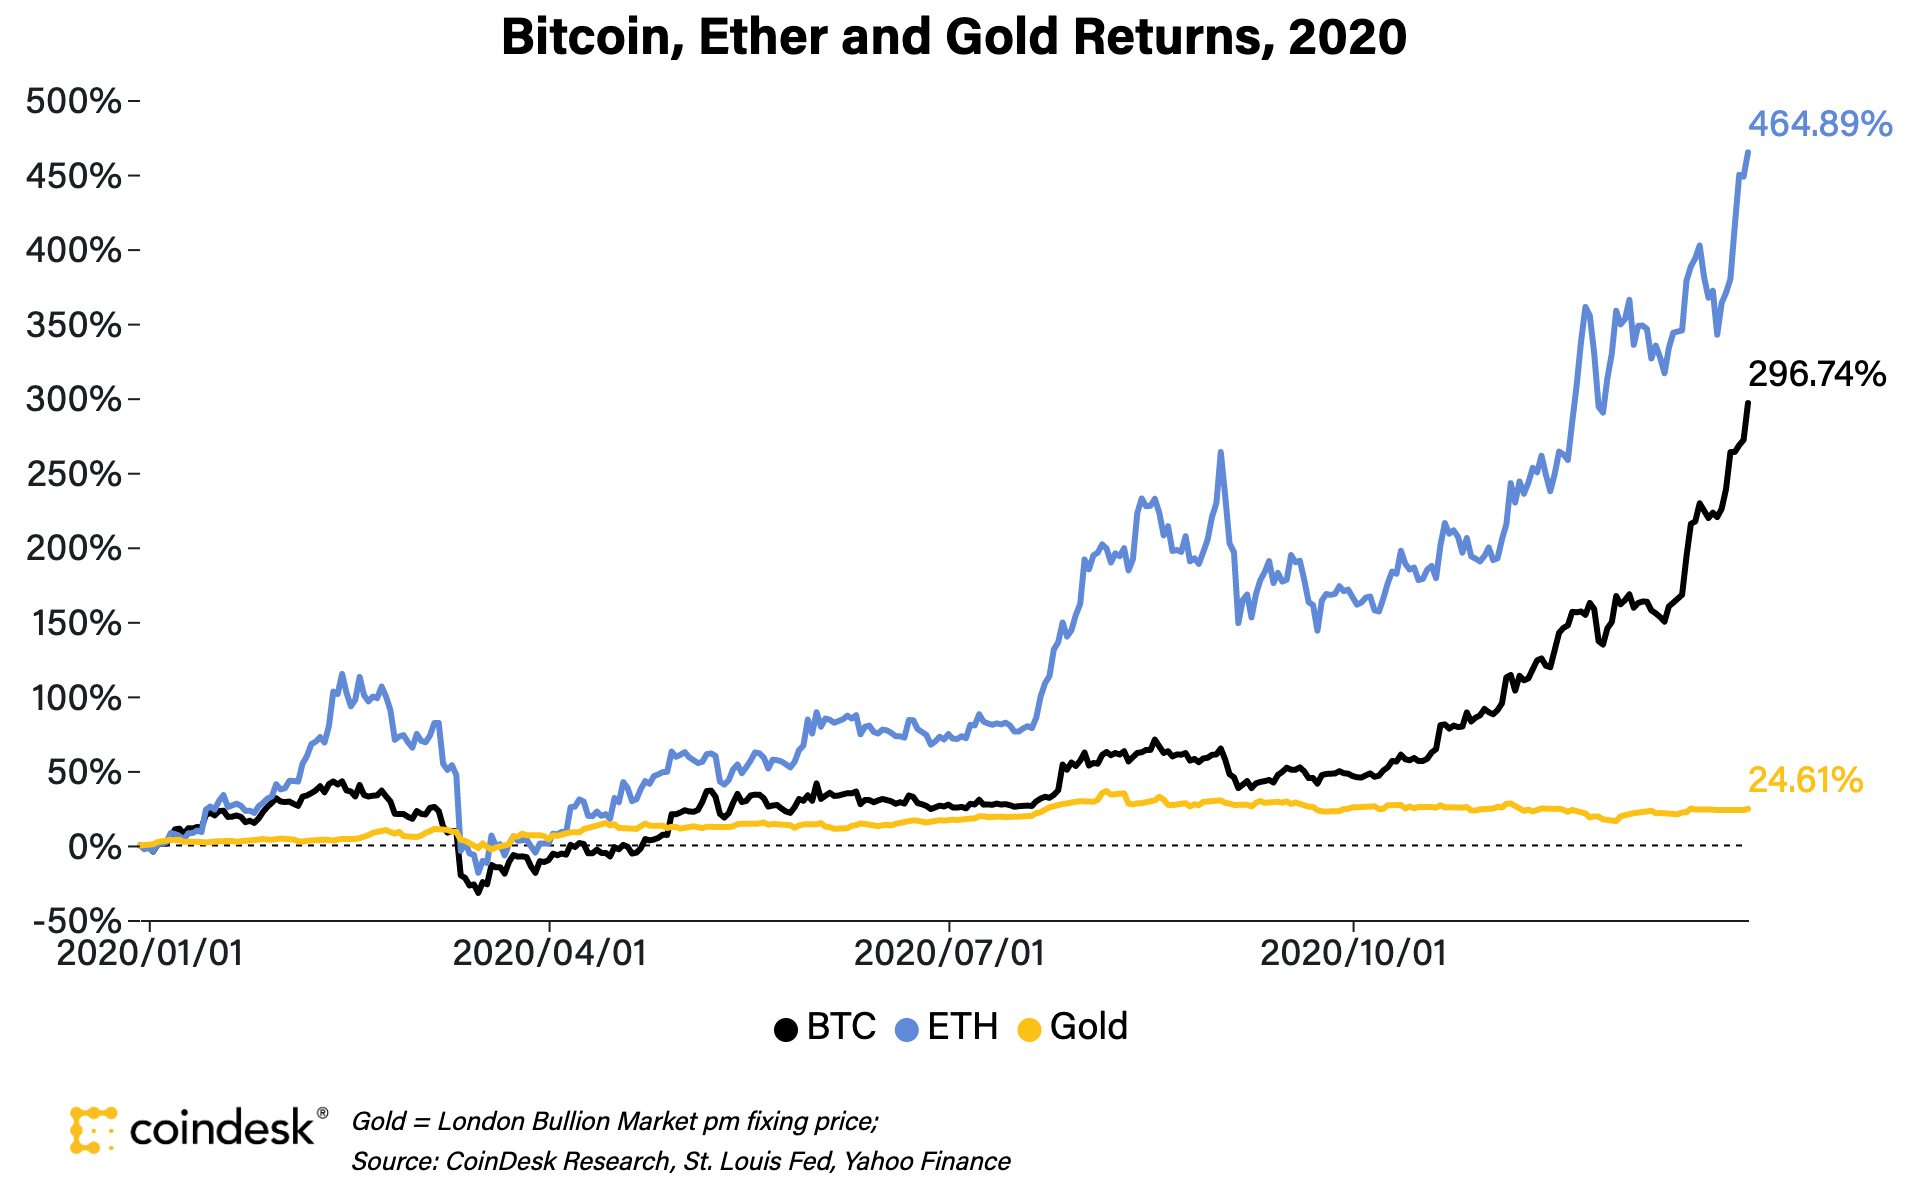 Btc gold market price 1 bitcoin price 2017